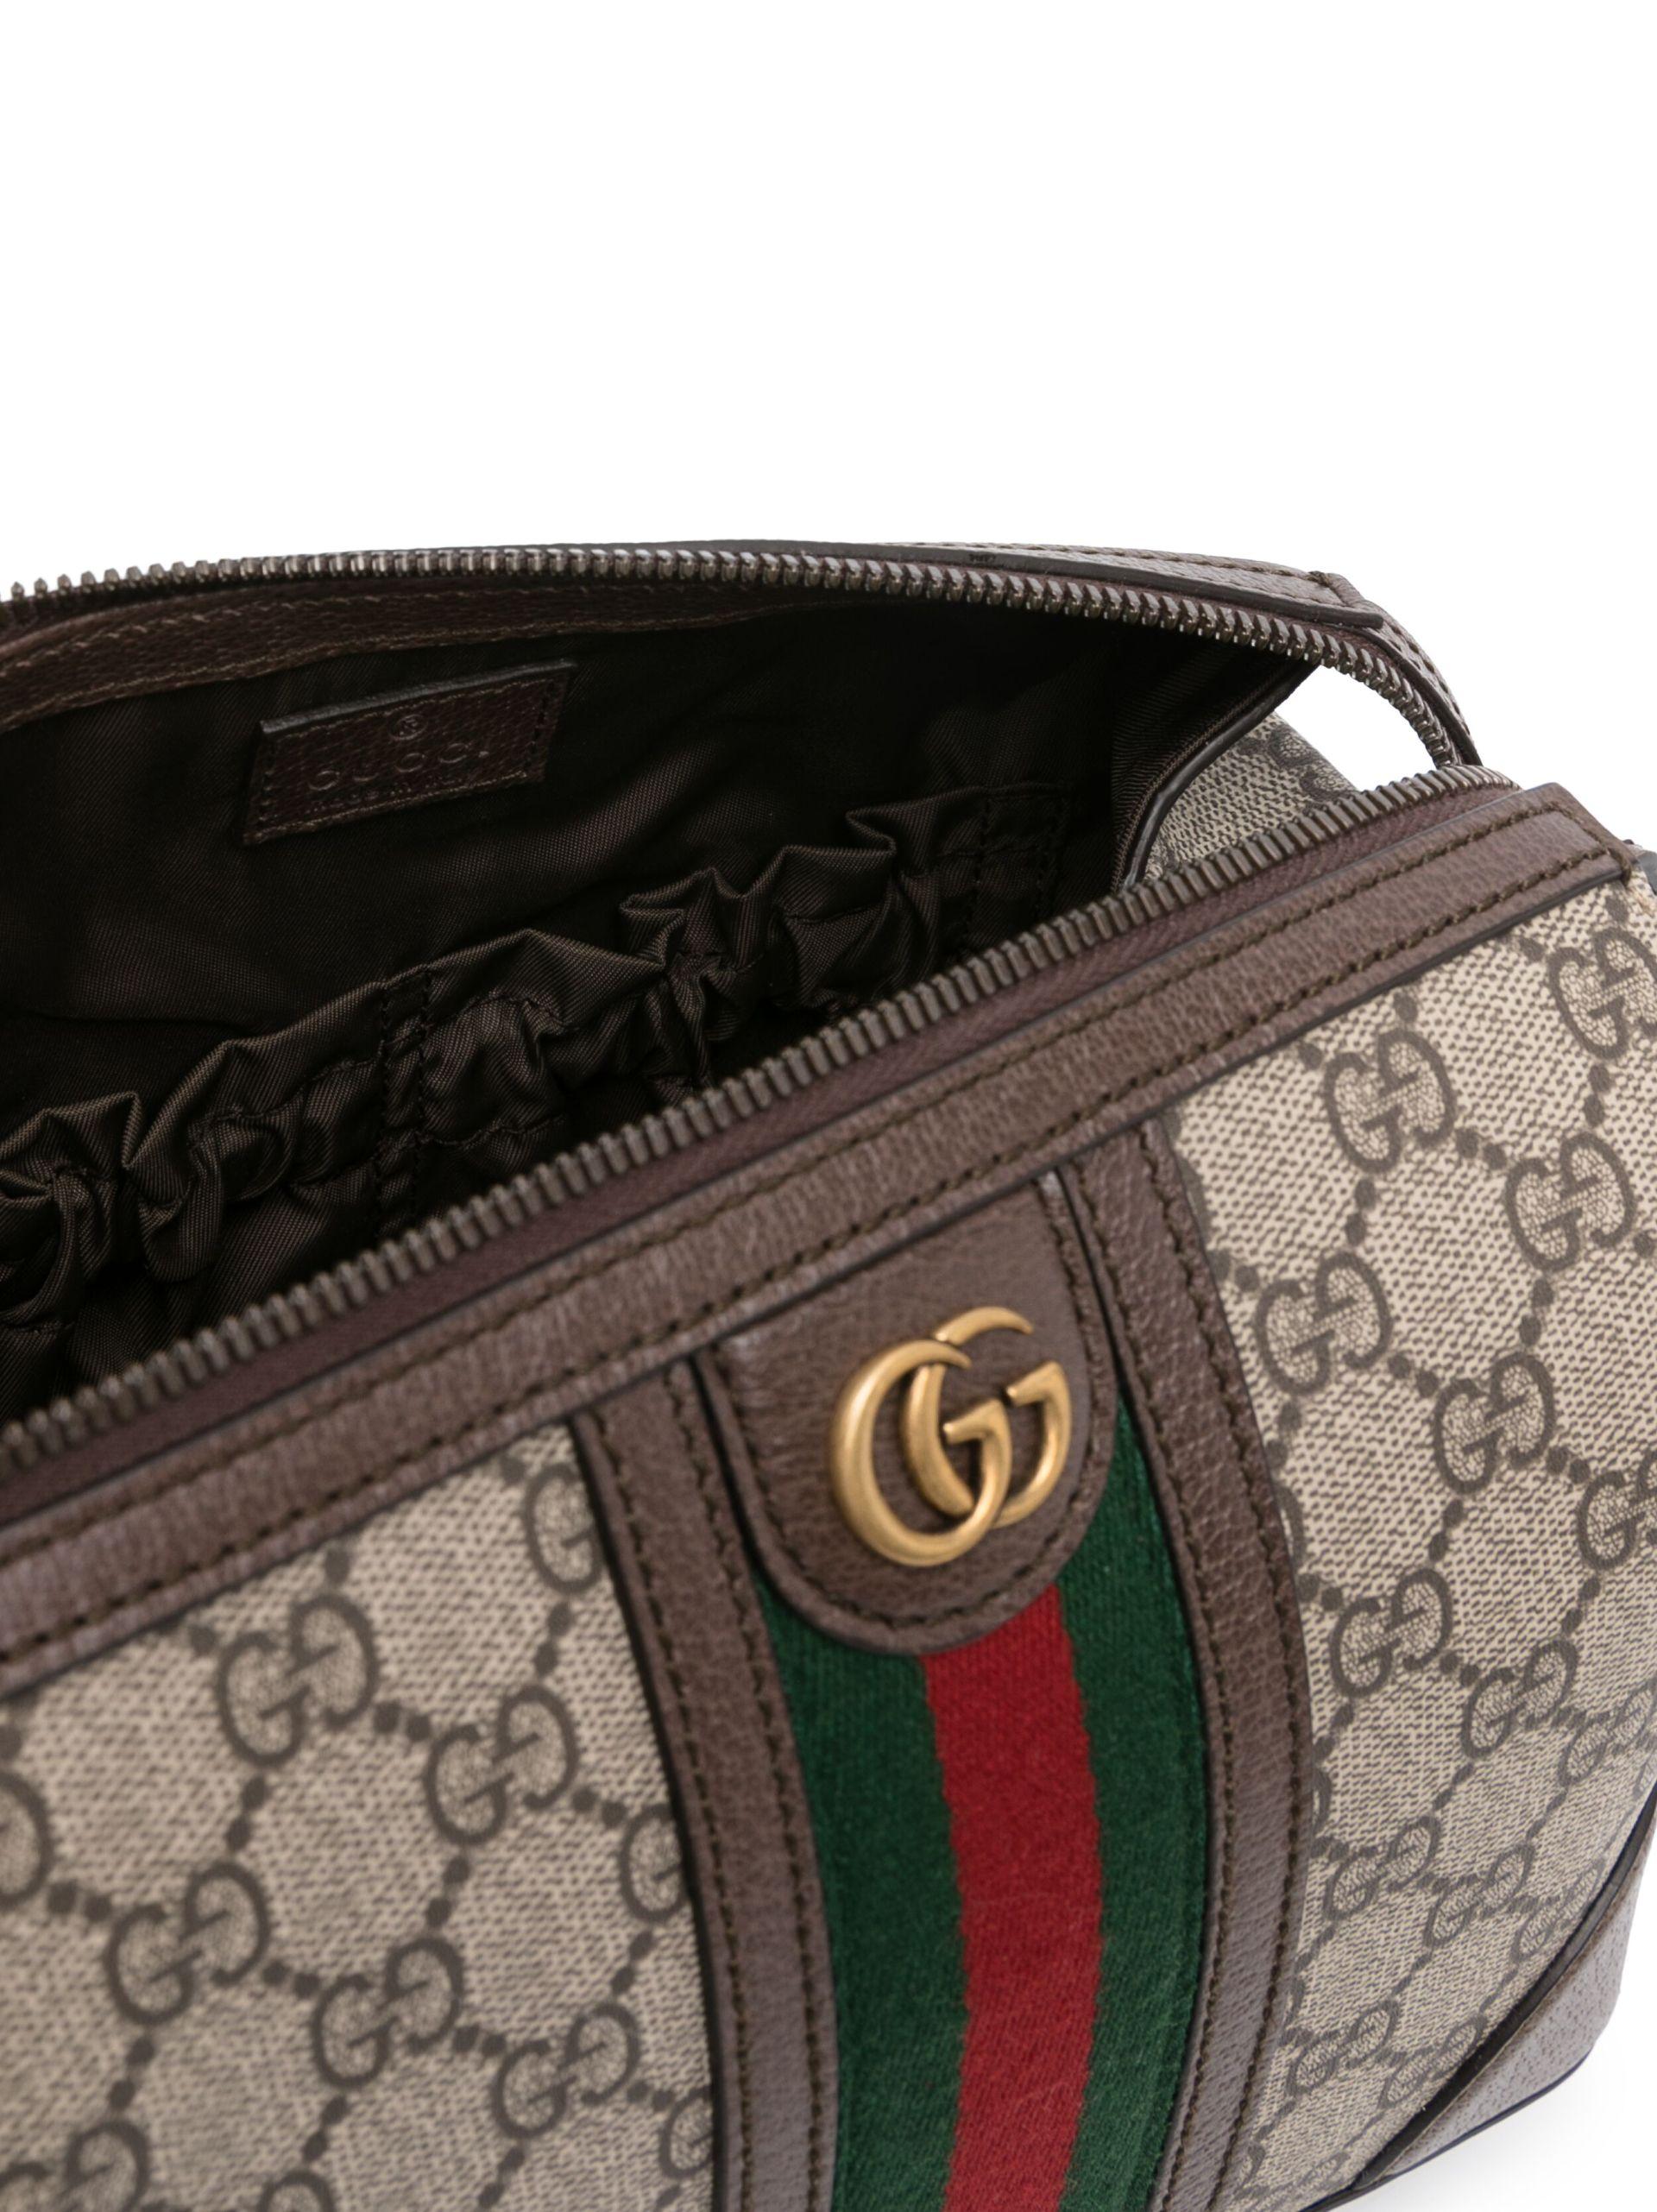 Gucci GG Supreme Leather Wash Bag - Brown for Men